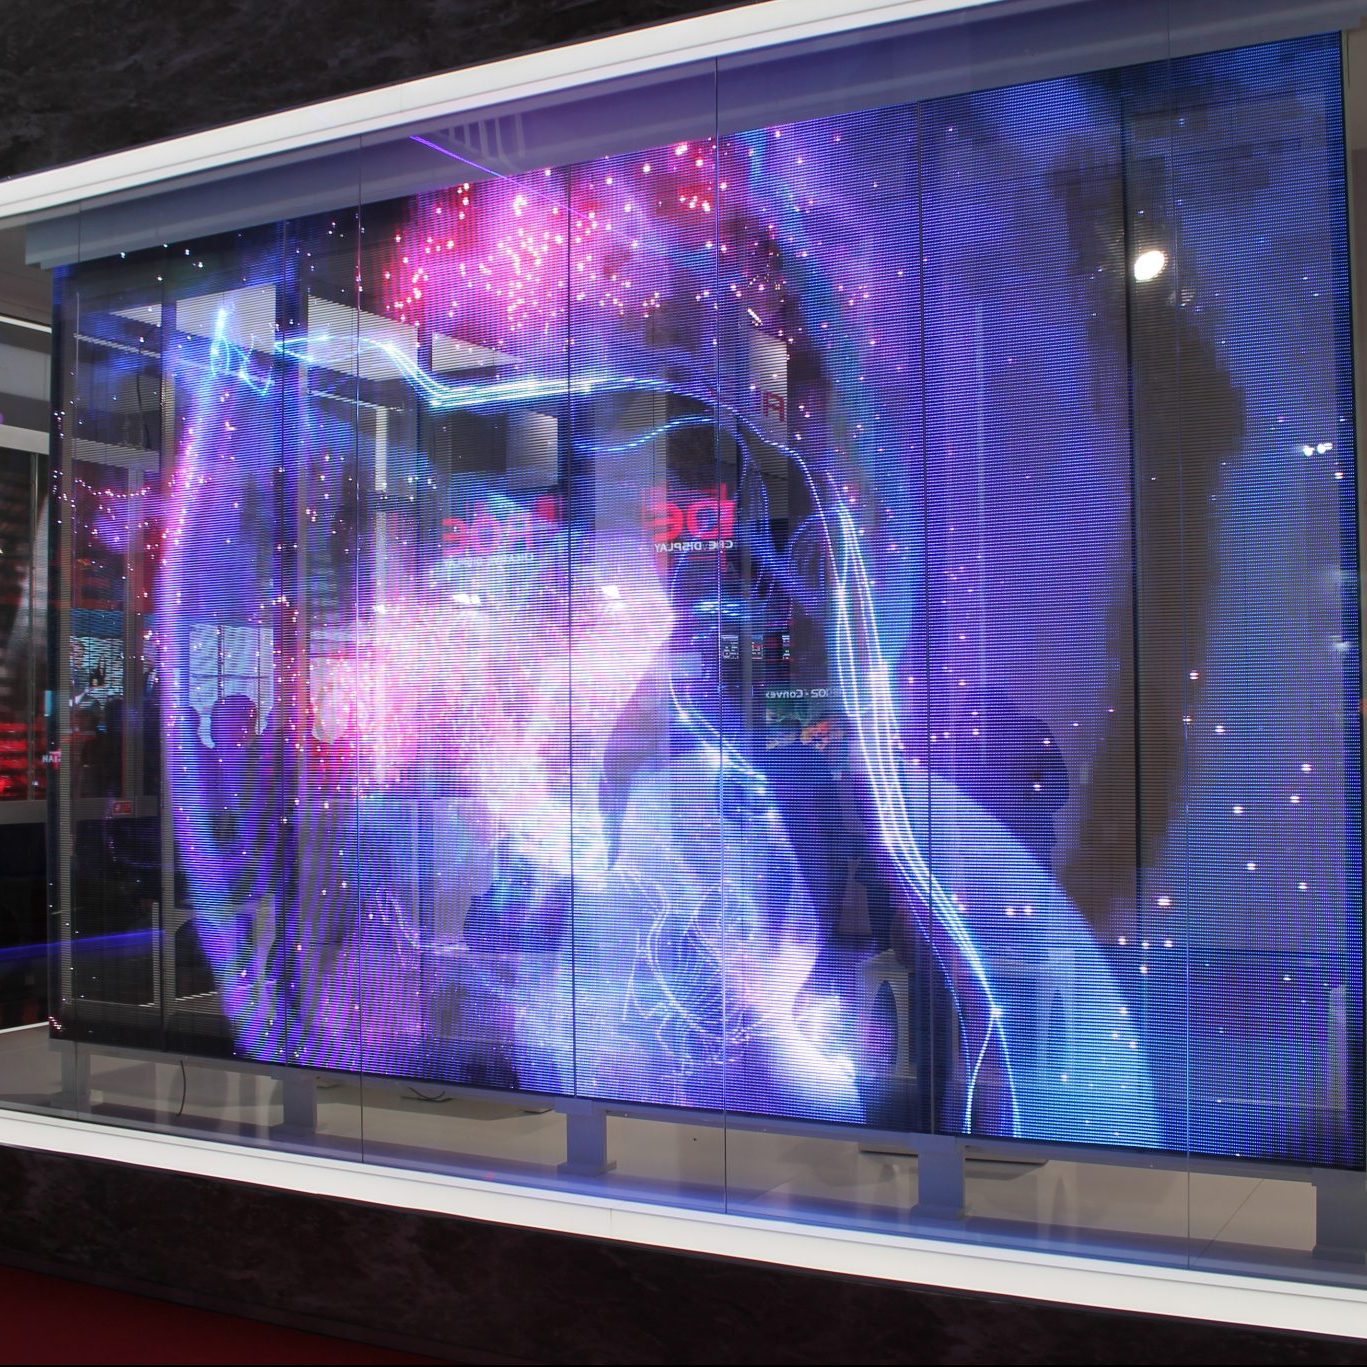 Image shows a digital screen inside a shop window